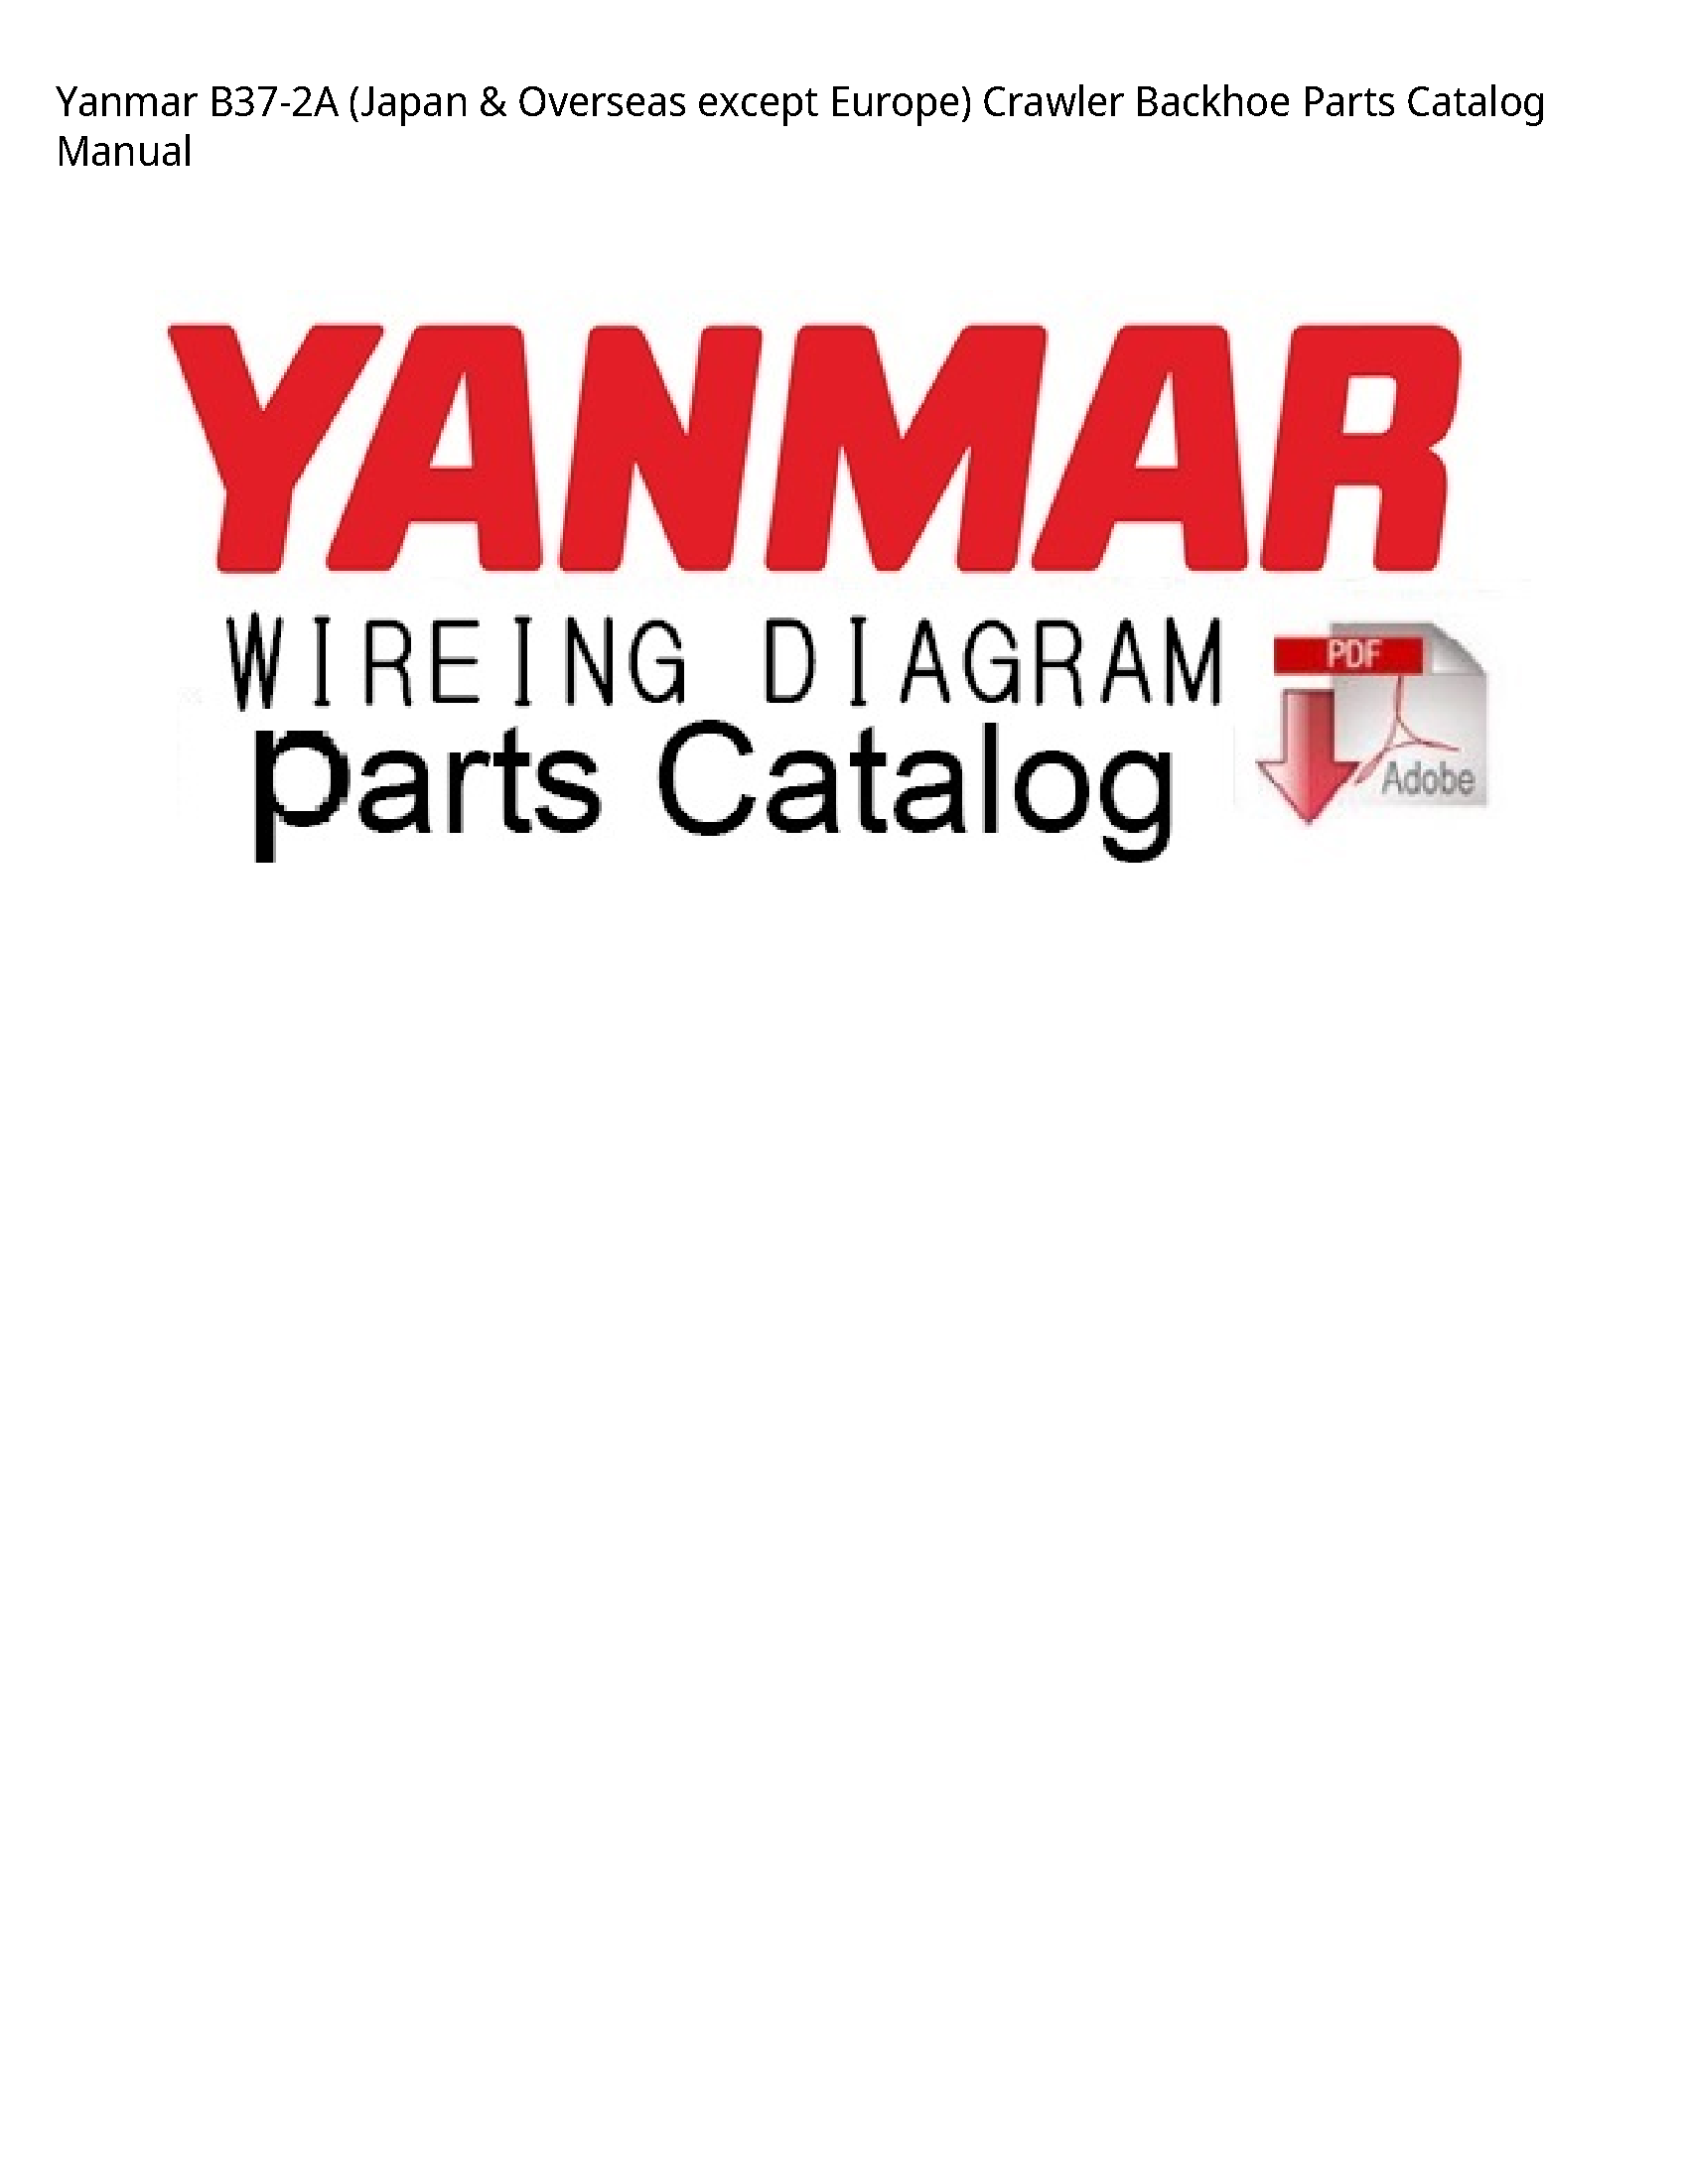 Yanmar B37-2A (Japan Overseas except Europe) Crawler Backhoe Parts Catalog manual